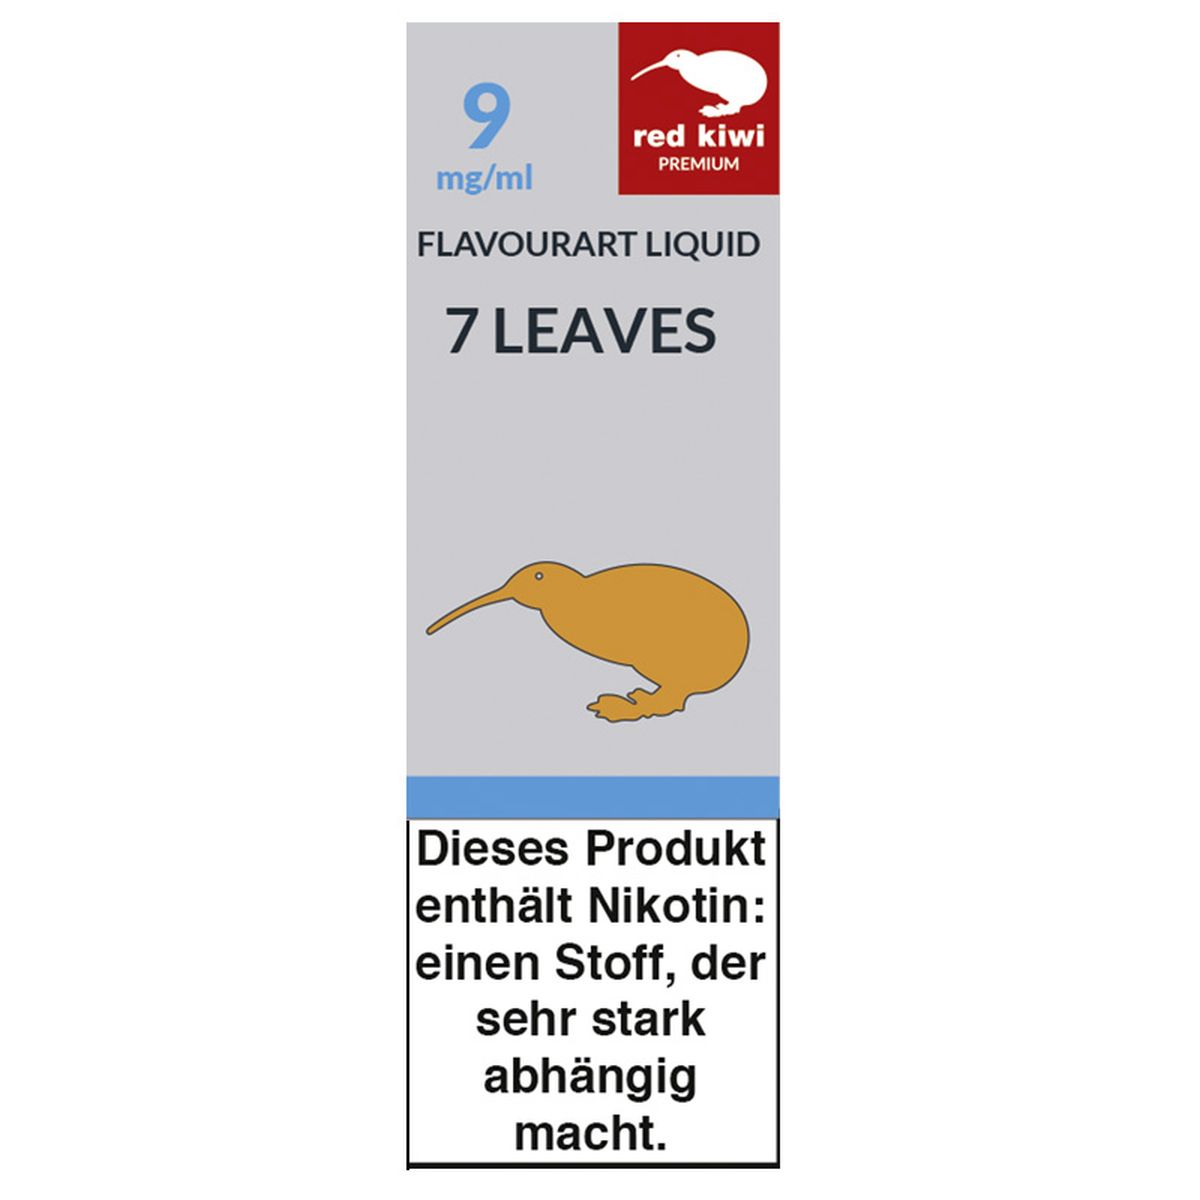 Red Kiwi Red Kiwi Flavourart Liquid 7 Leaves 9mg Nikotin/ml bei www.Tabakring.de kaufen